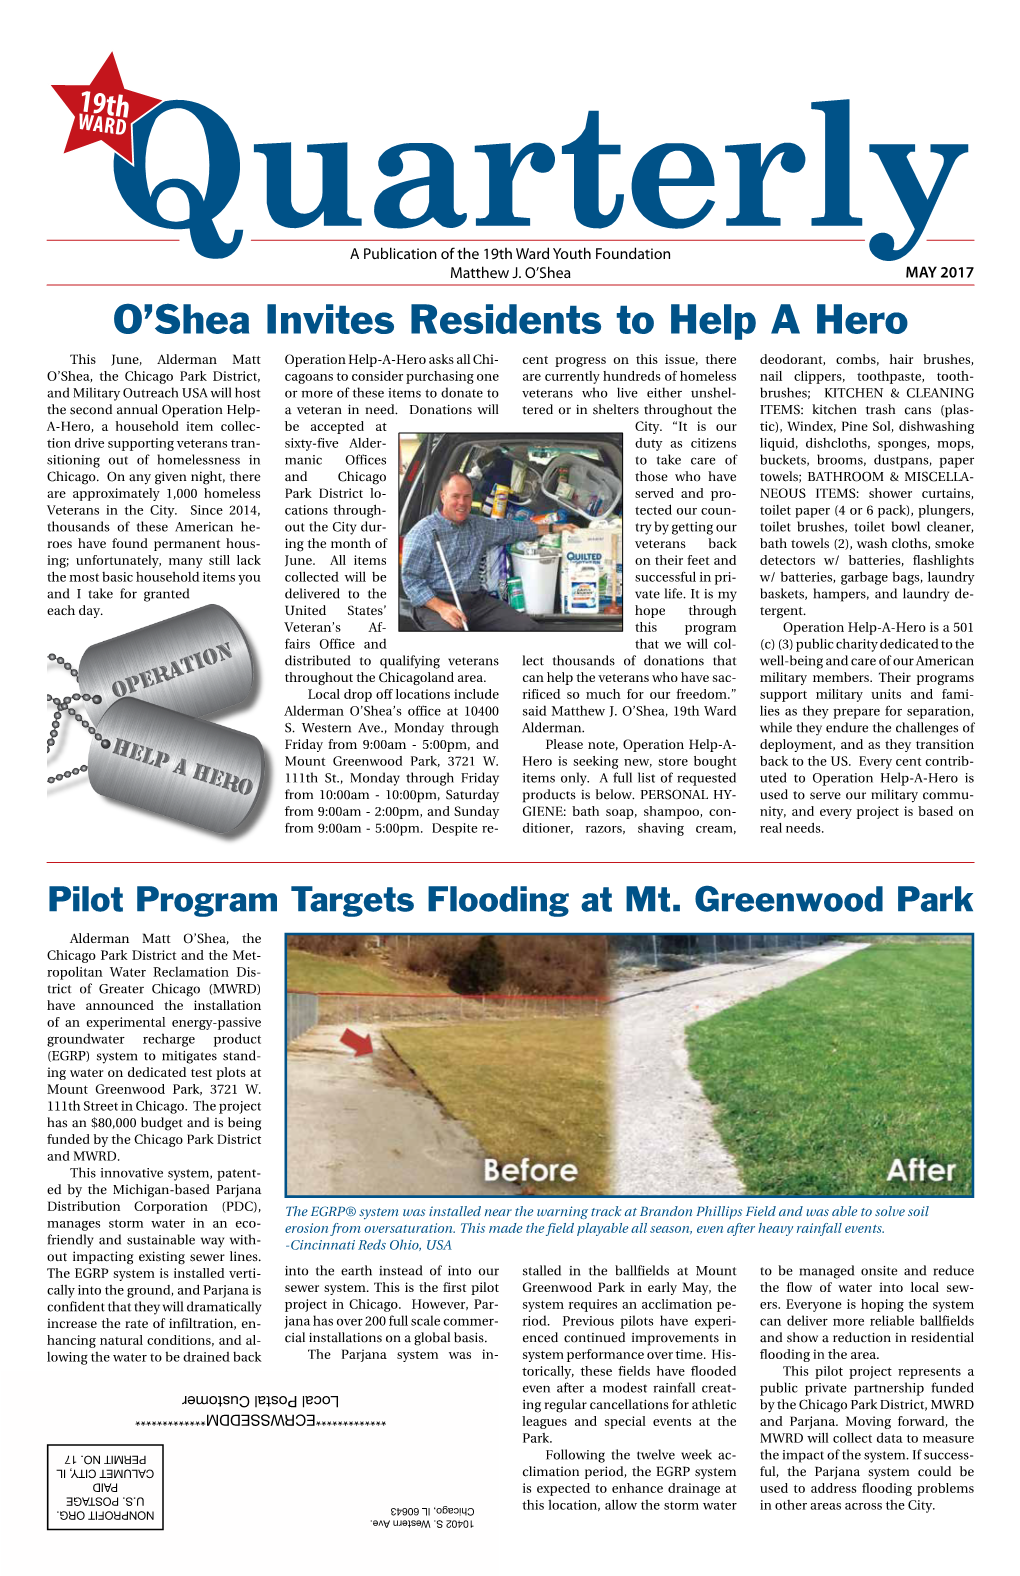 O'shea Invites Residents to Help a Hero